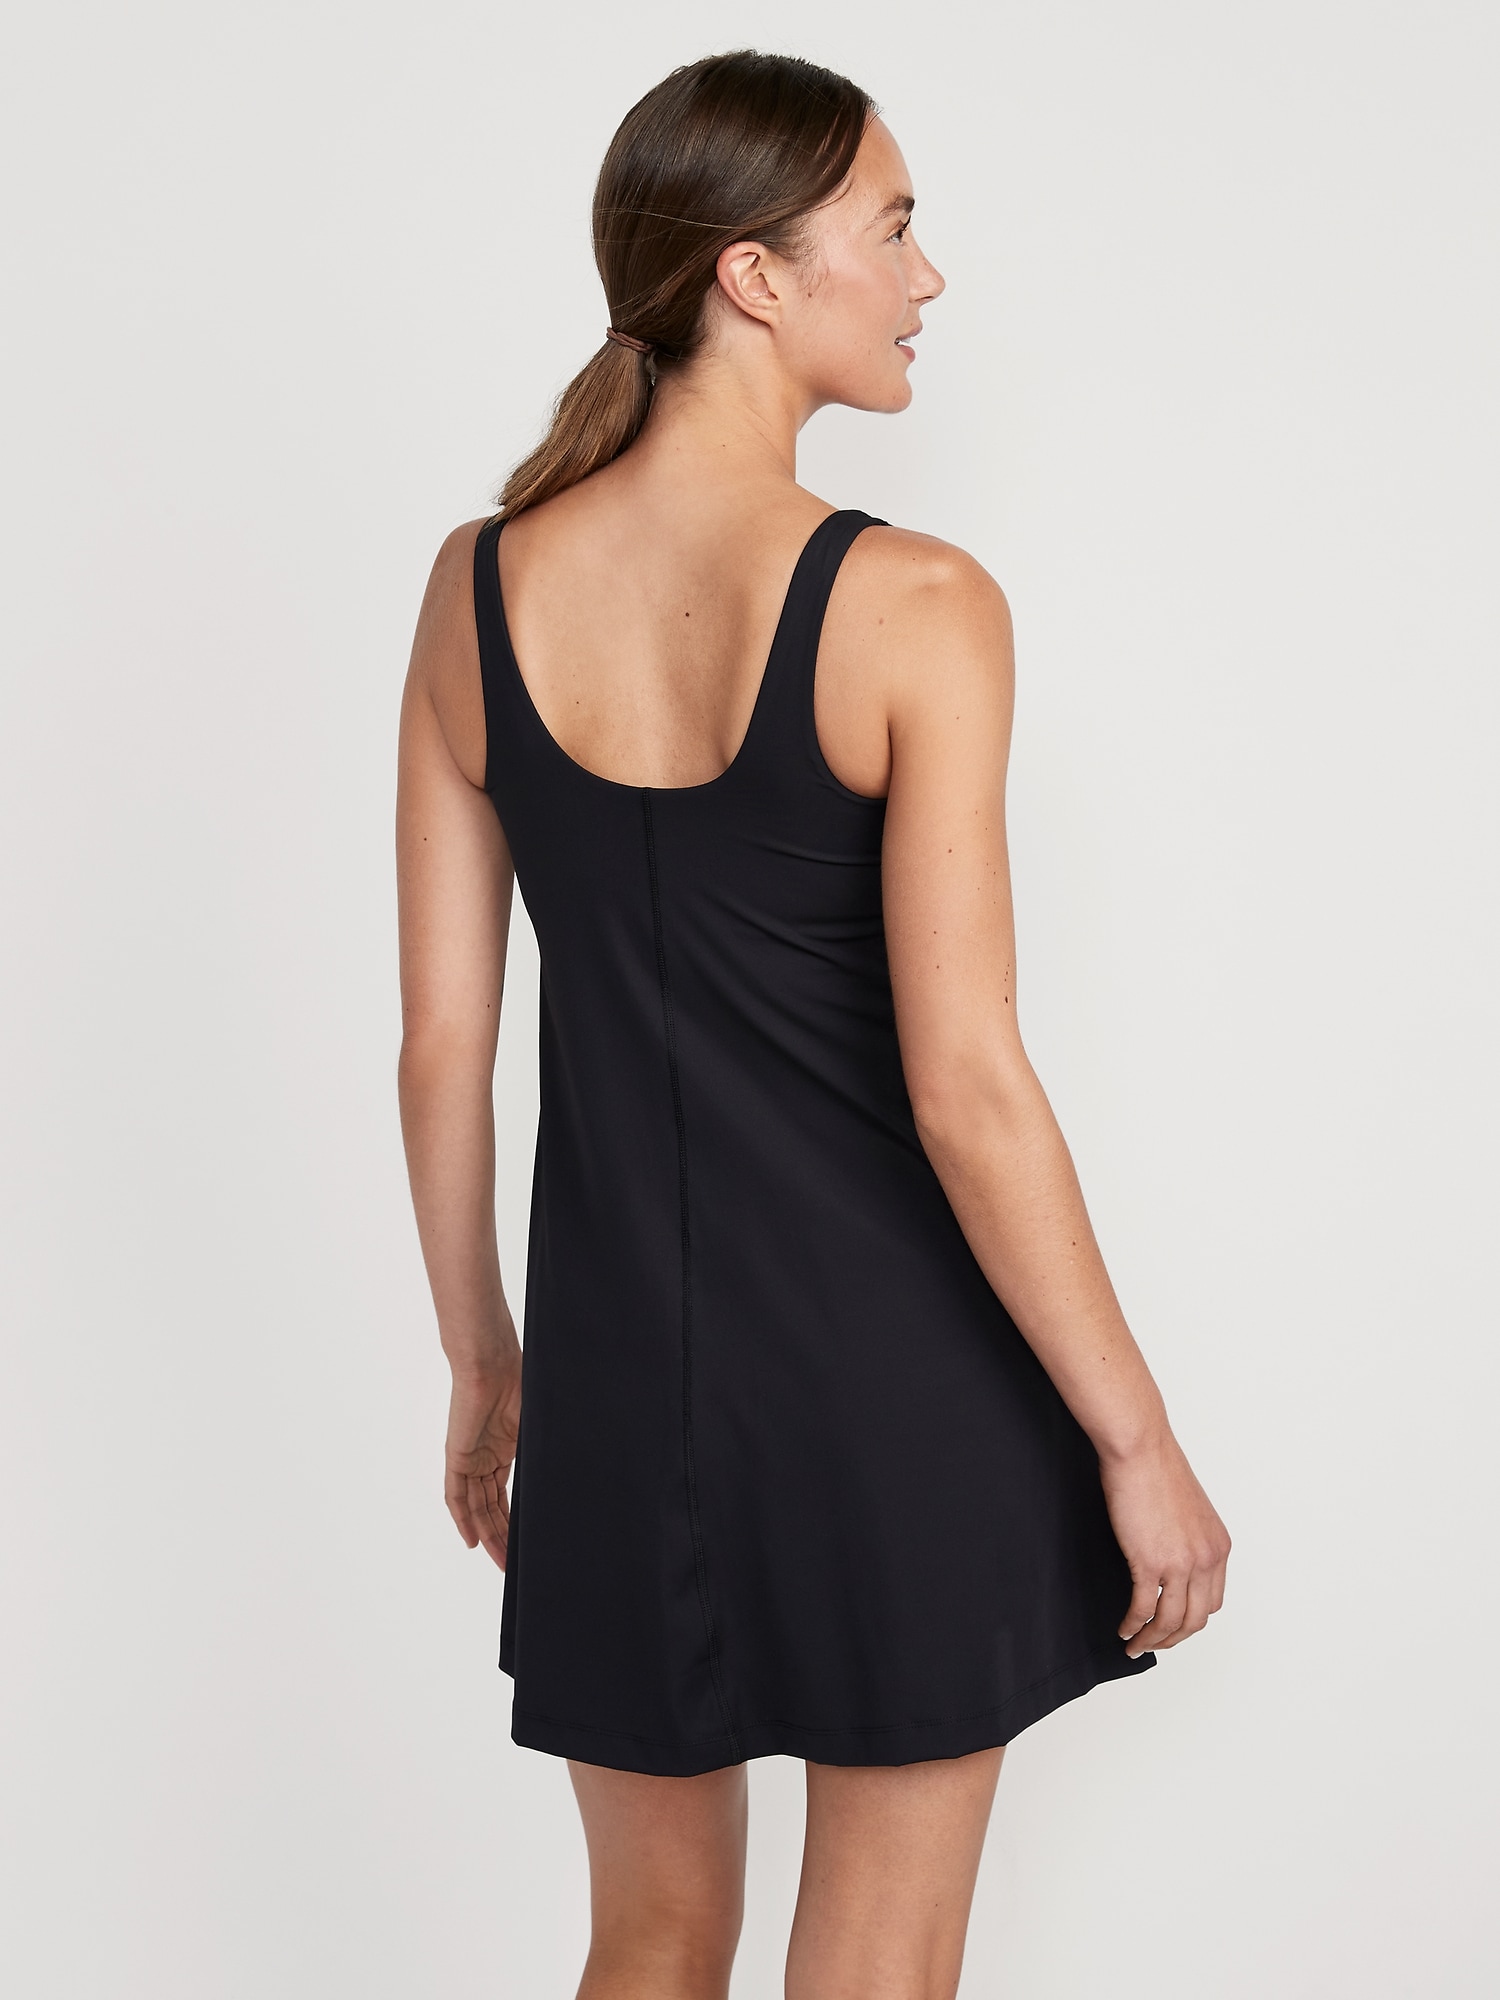 Old Navy - PowerSoft Sleeveless Shelf-Bra Support Dress for Women